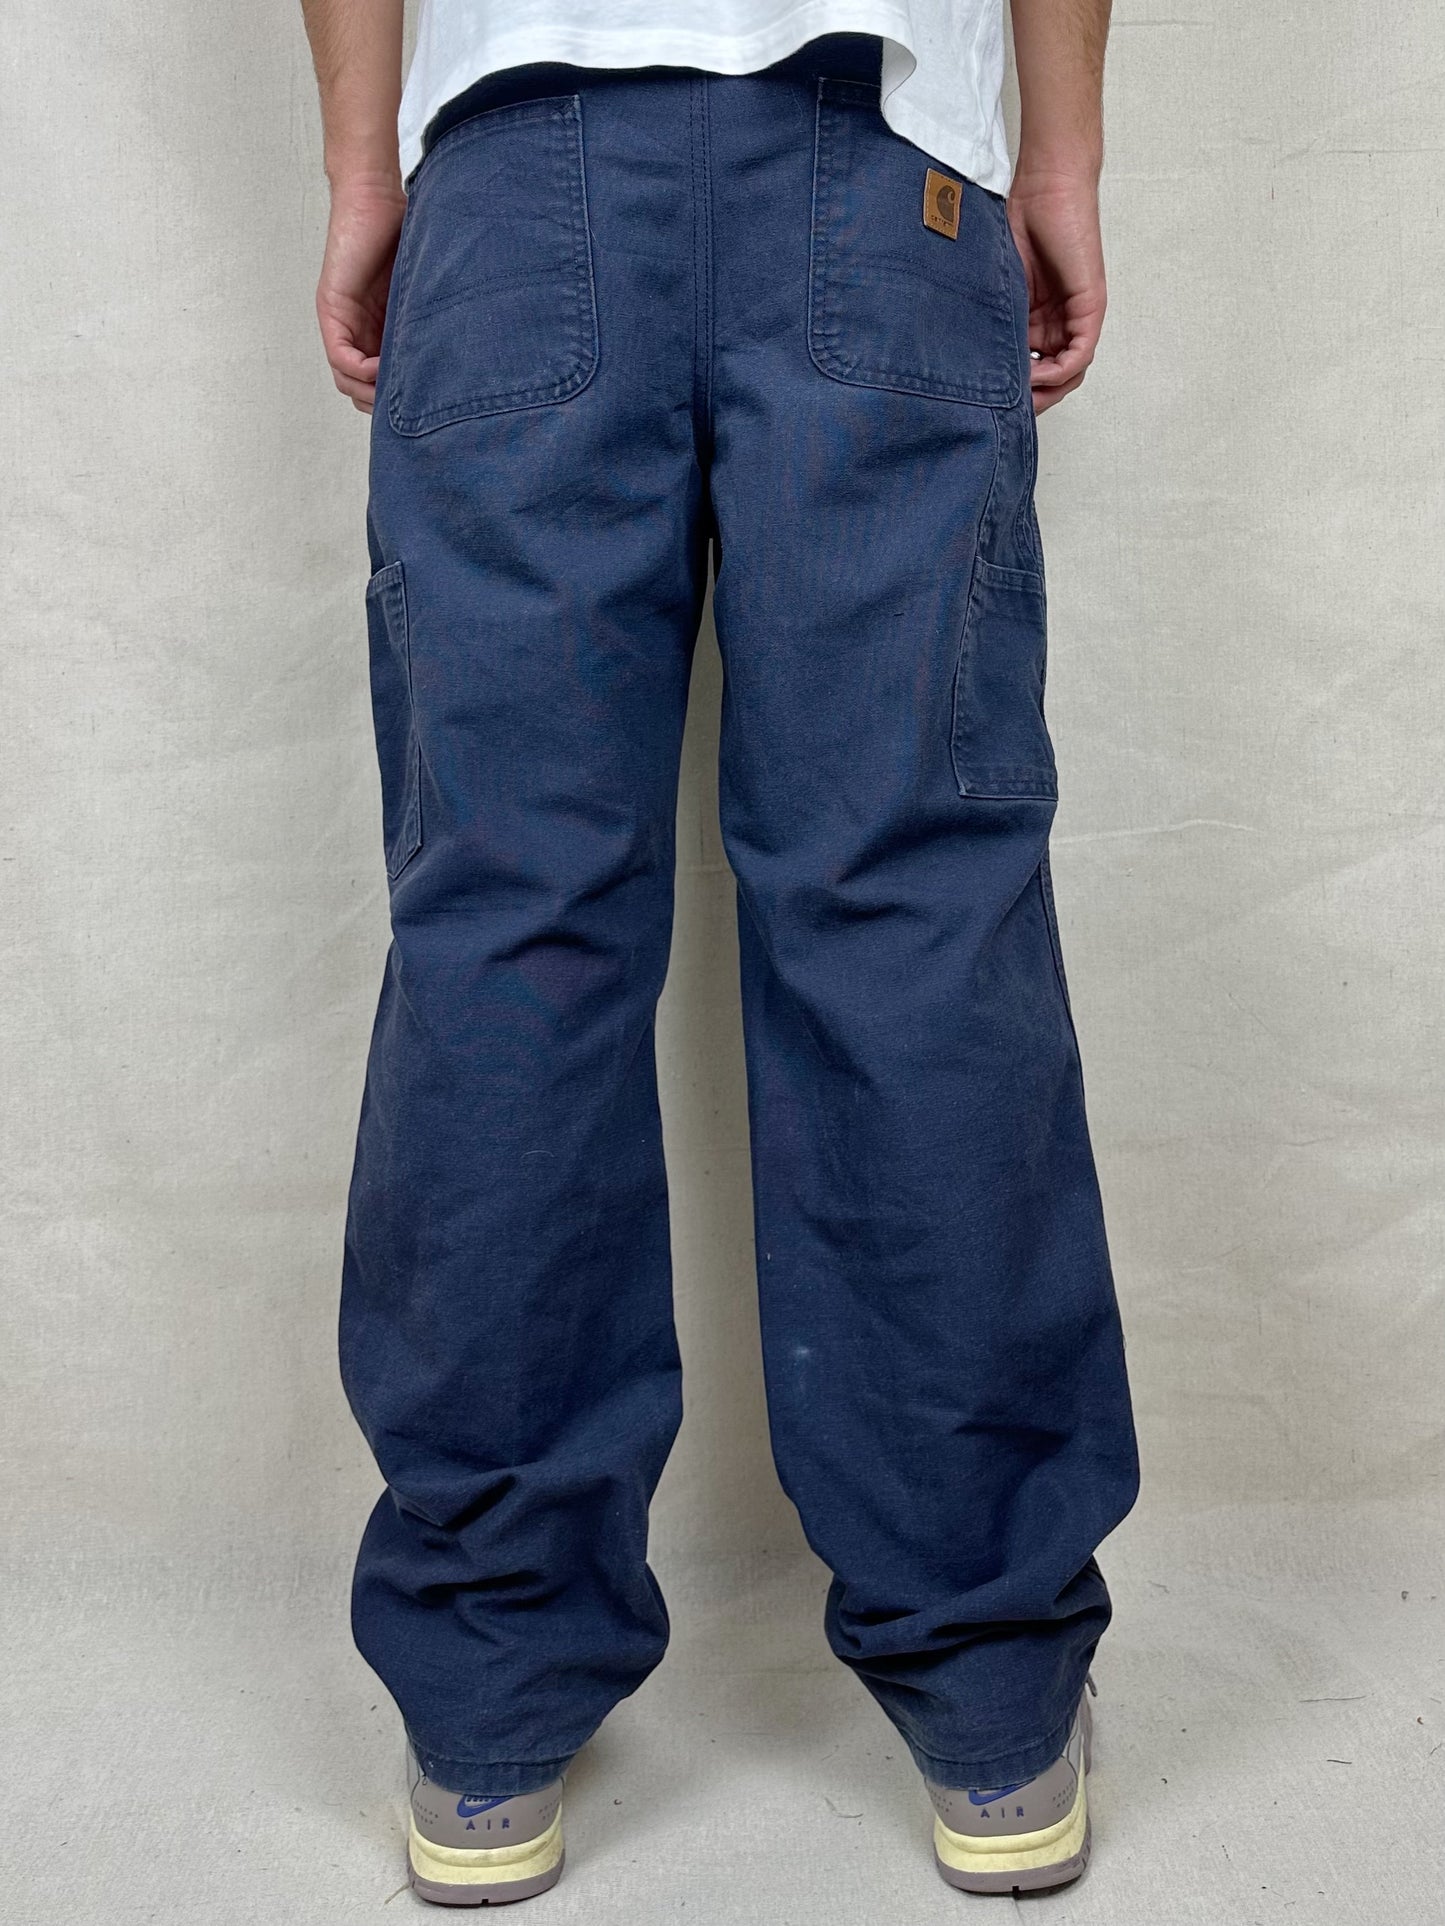 90's Carhartt Vintage Carpenter Jeans Size 32x32